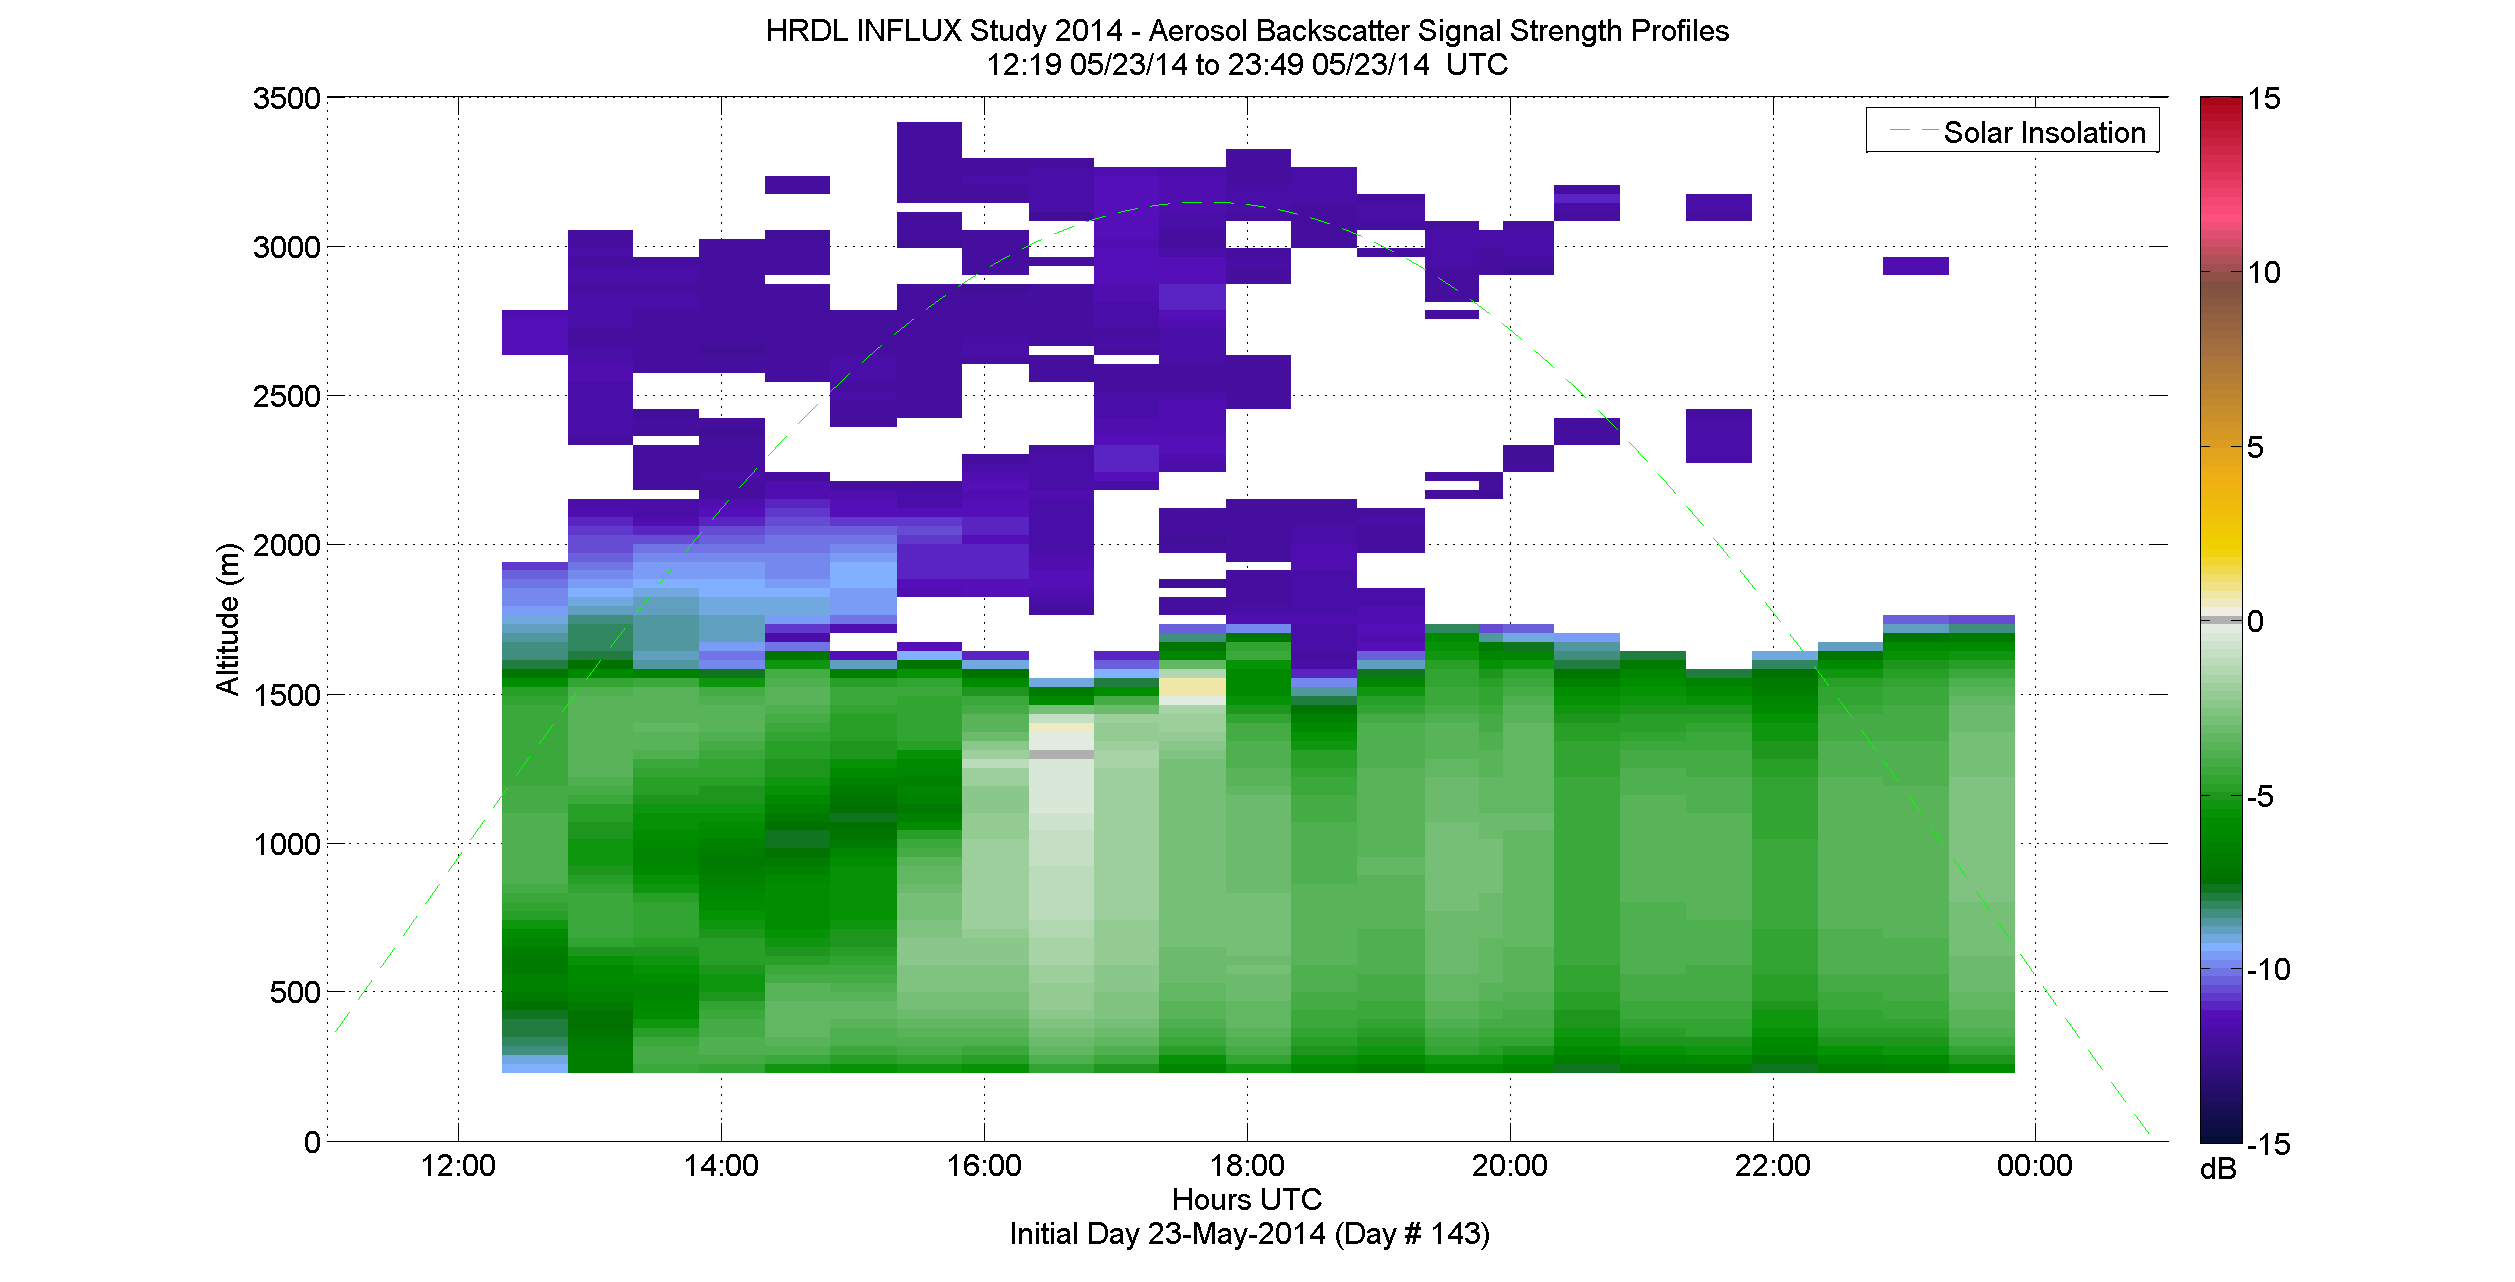 HRDL aerosol backscatter signal strength profile - May 23 pm